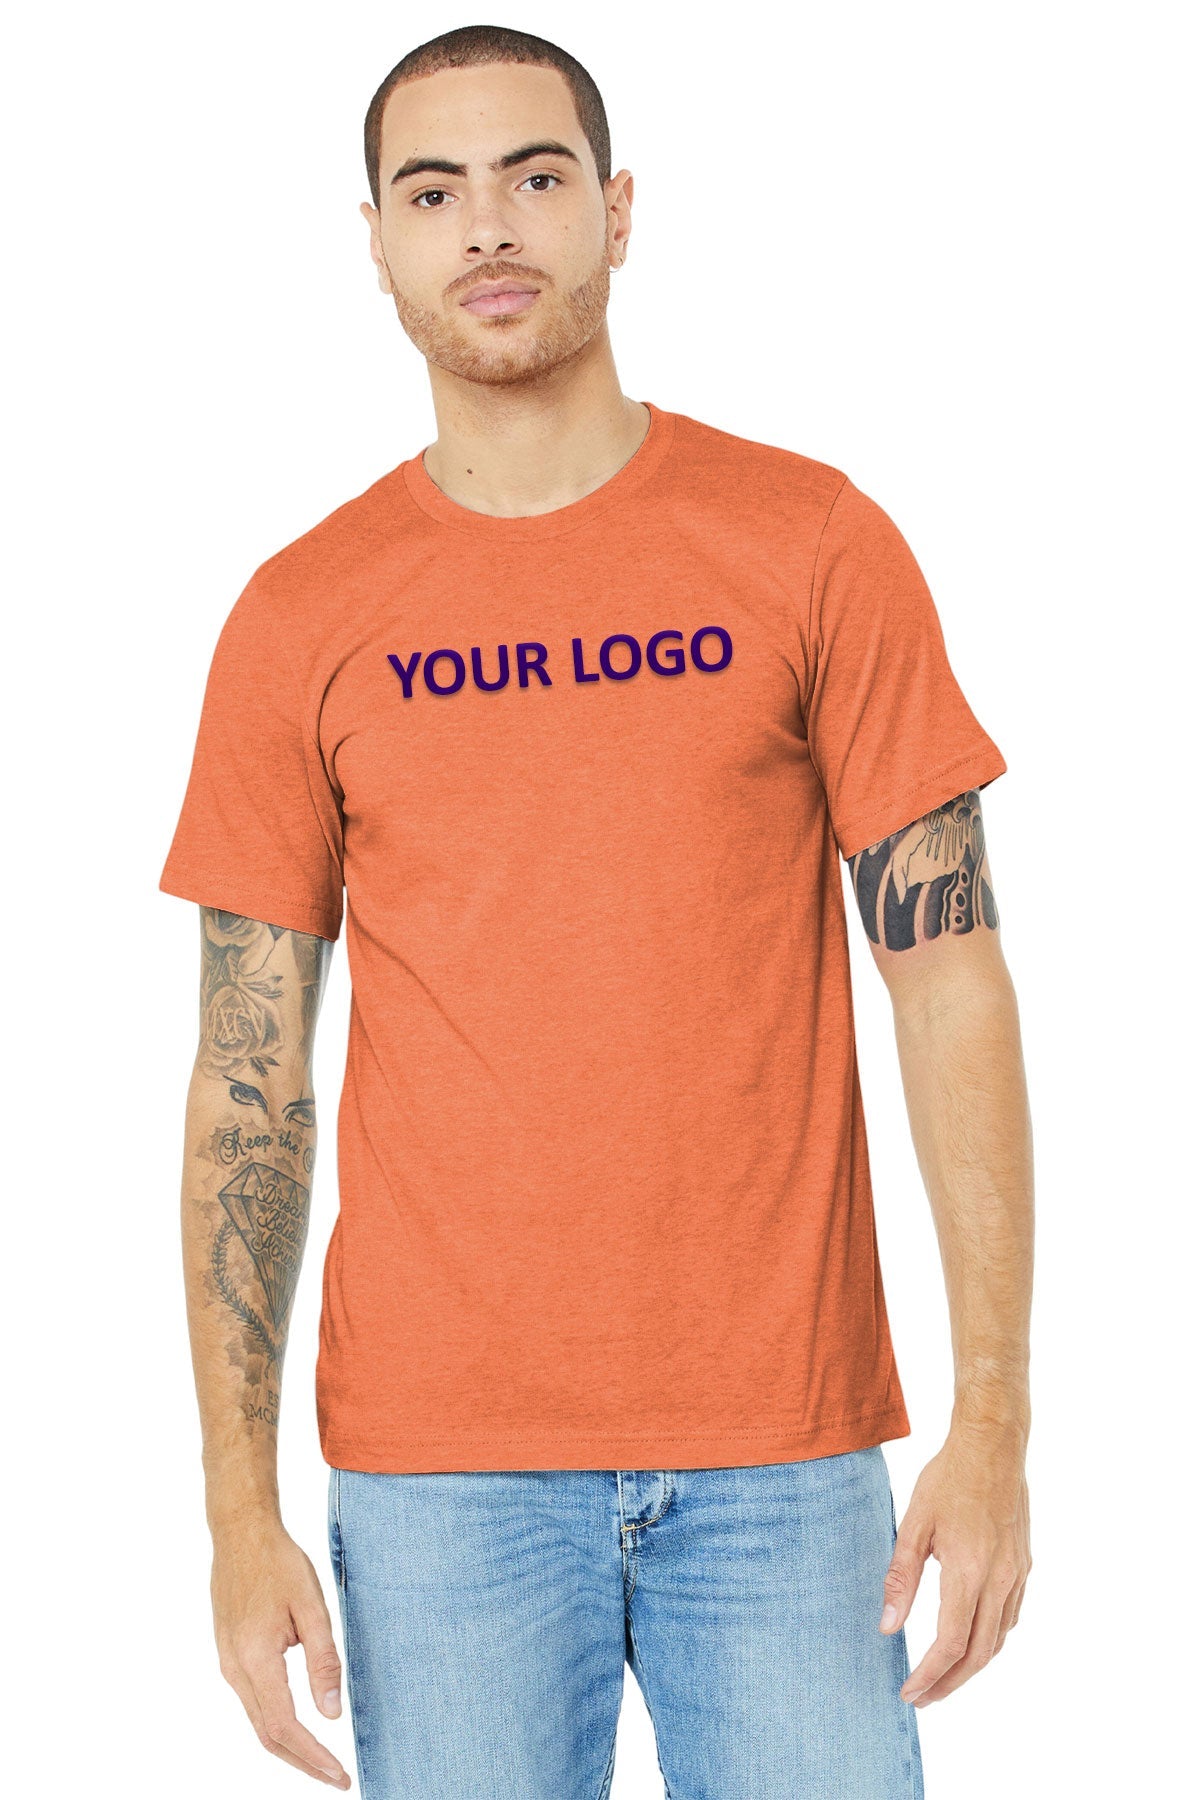 bella + canvas unisex jersey short sleeve t-shirt 3001cvc heather orange